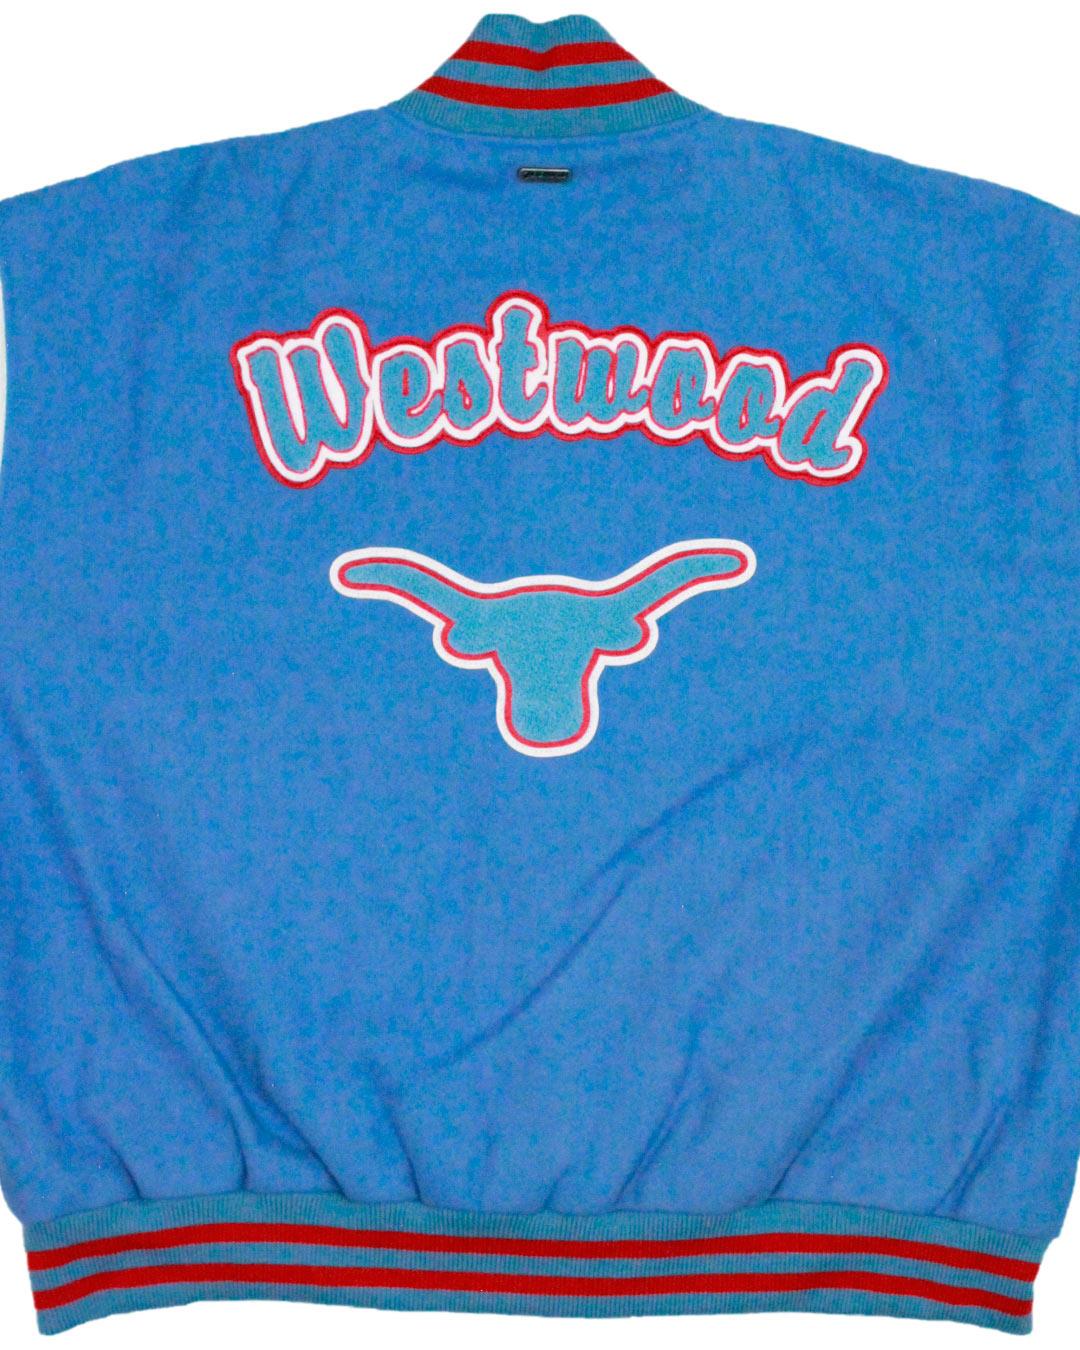 Westwood High School Longhorns Letterman Jacket, Memphis, TN - Back